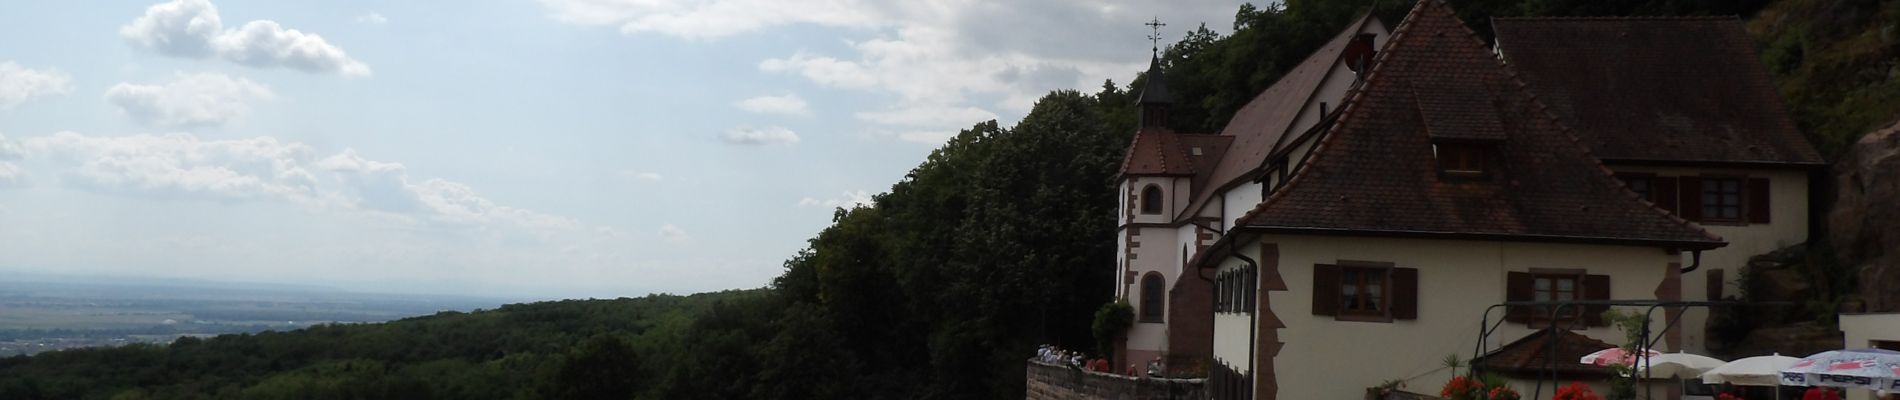 Point d'intérêt Pfaffenheim - Notre Dame du Schauenberg - Photo